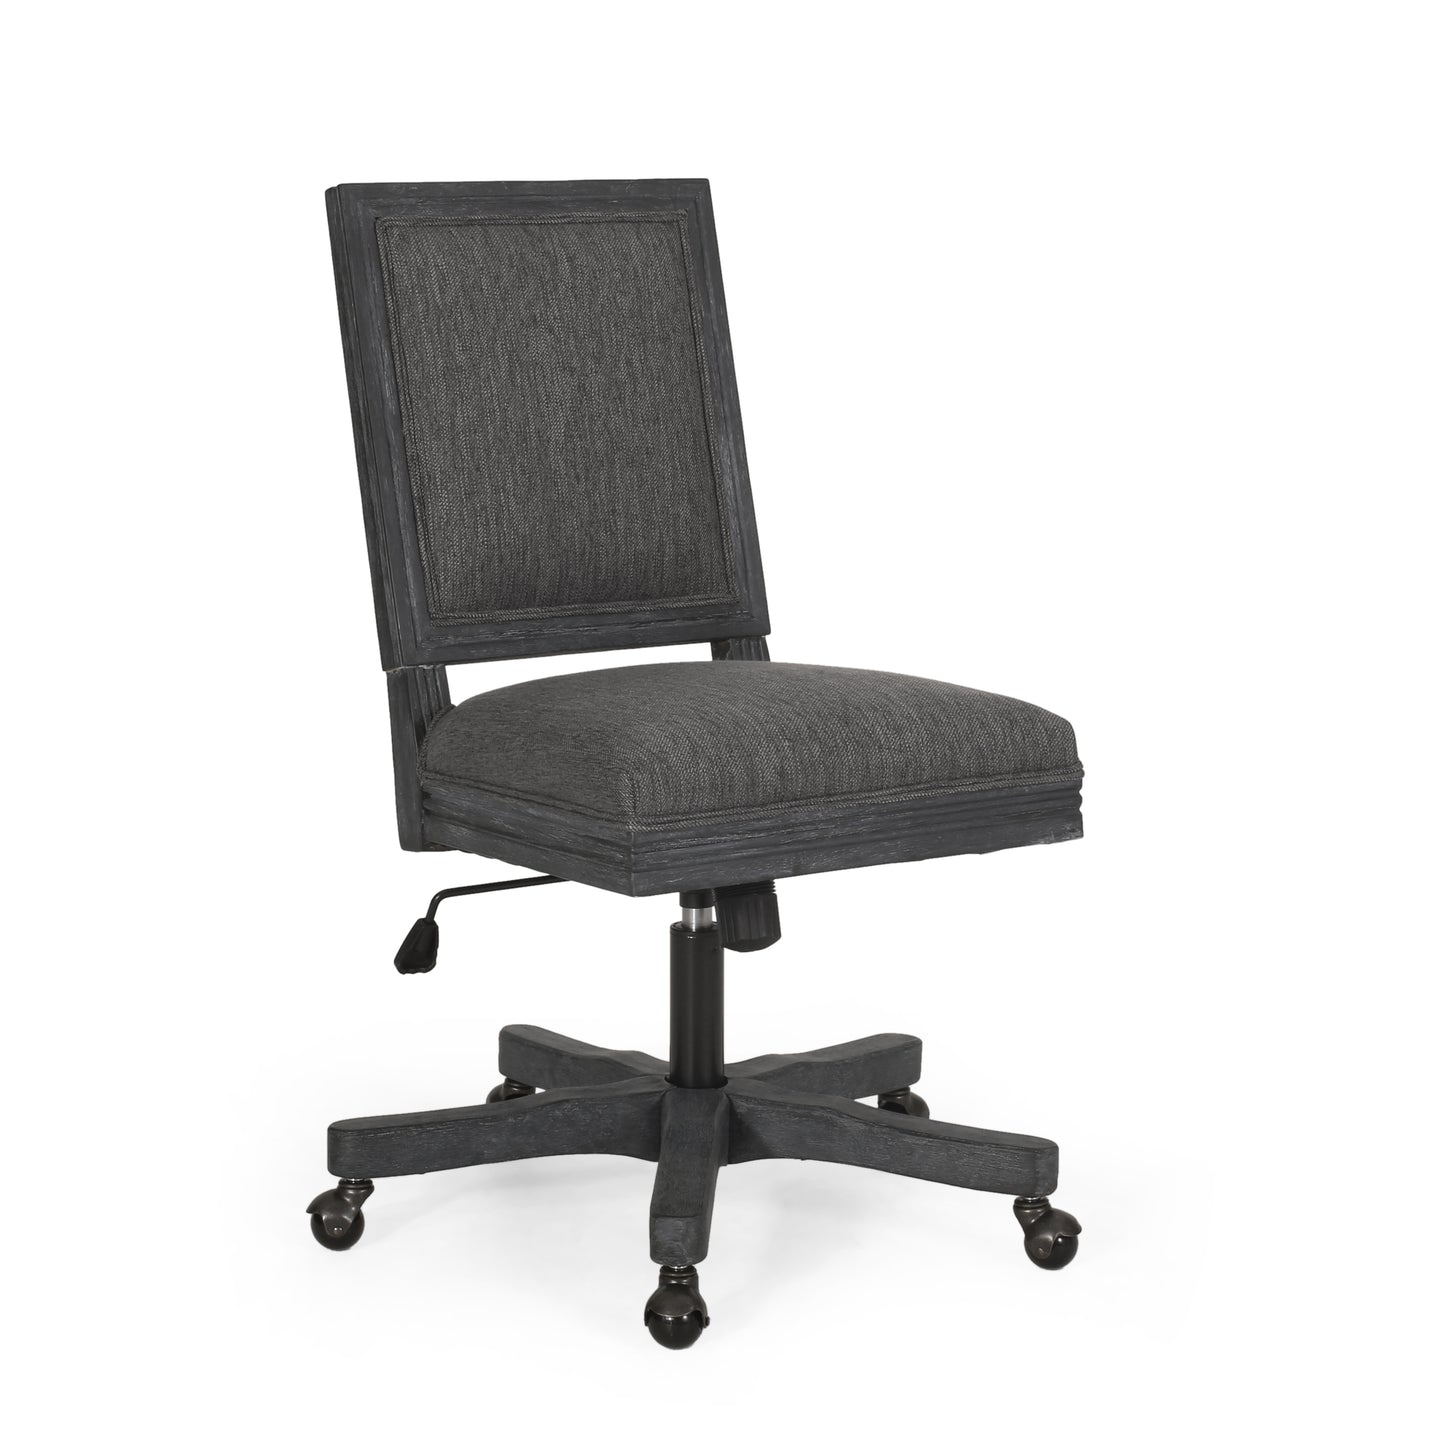 McGillen Rustic Upholstered Swivel Office Chair